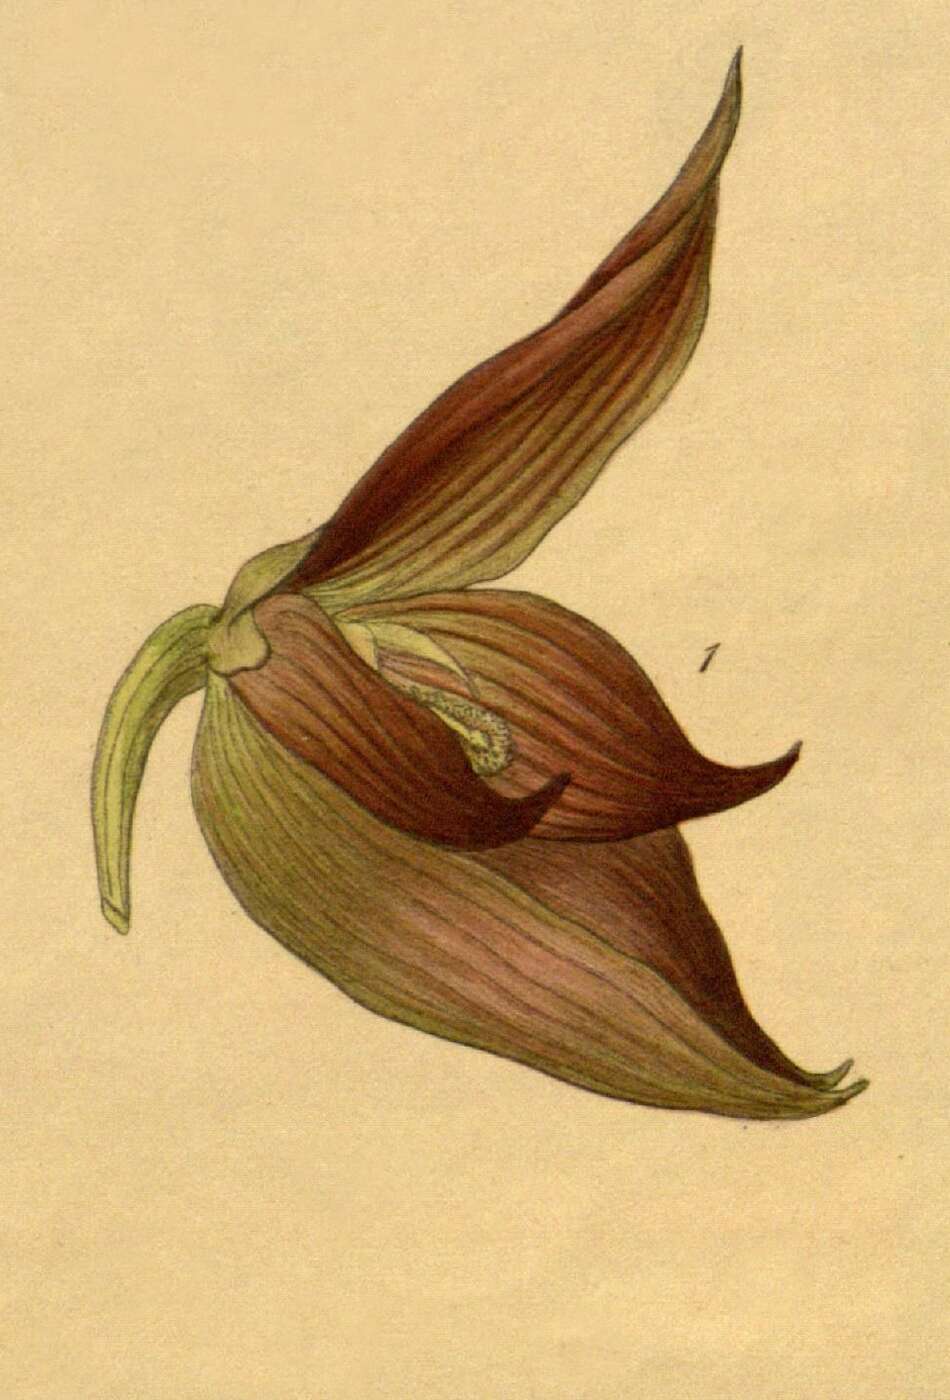 Image of Bulbophyllum mandibulare Rchb. fil.